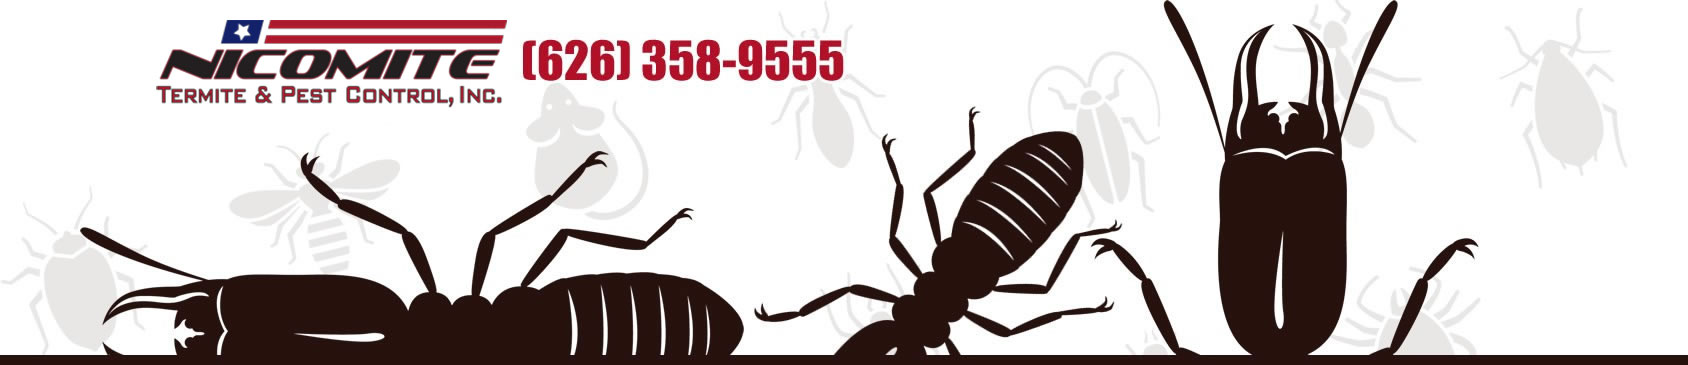 Nicomite Termite and Pest Control Inc.